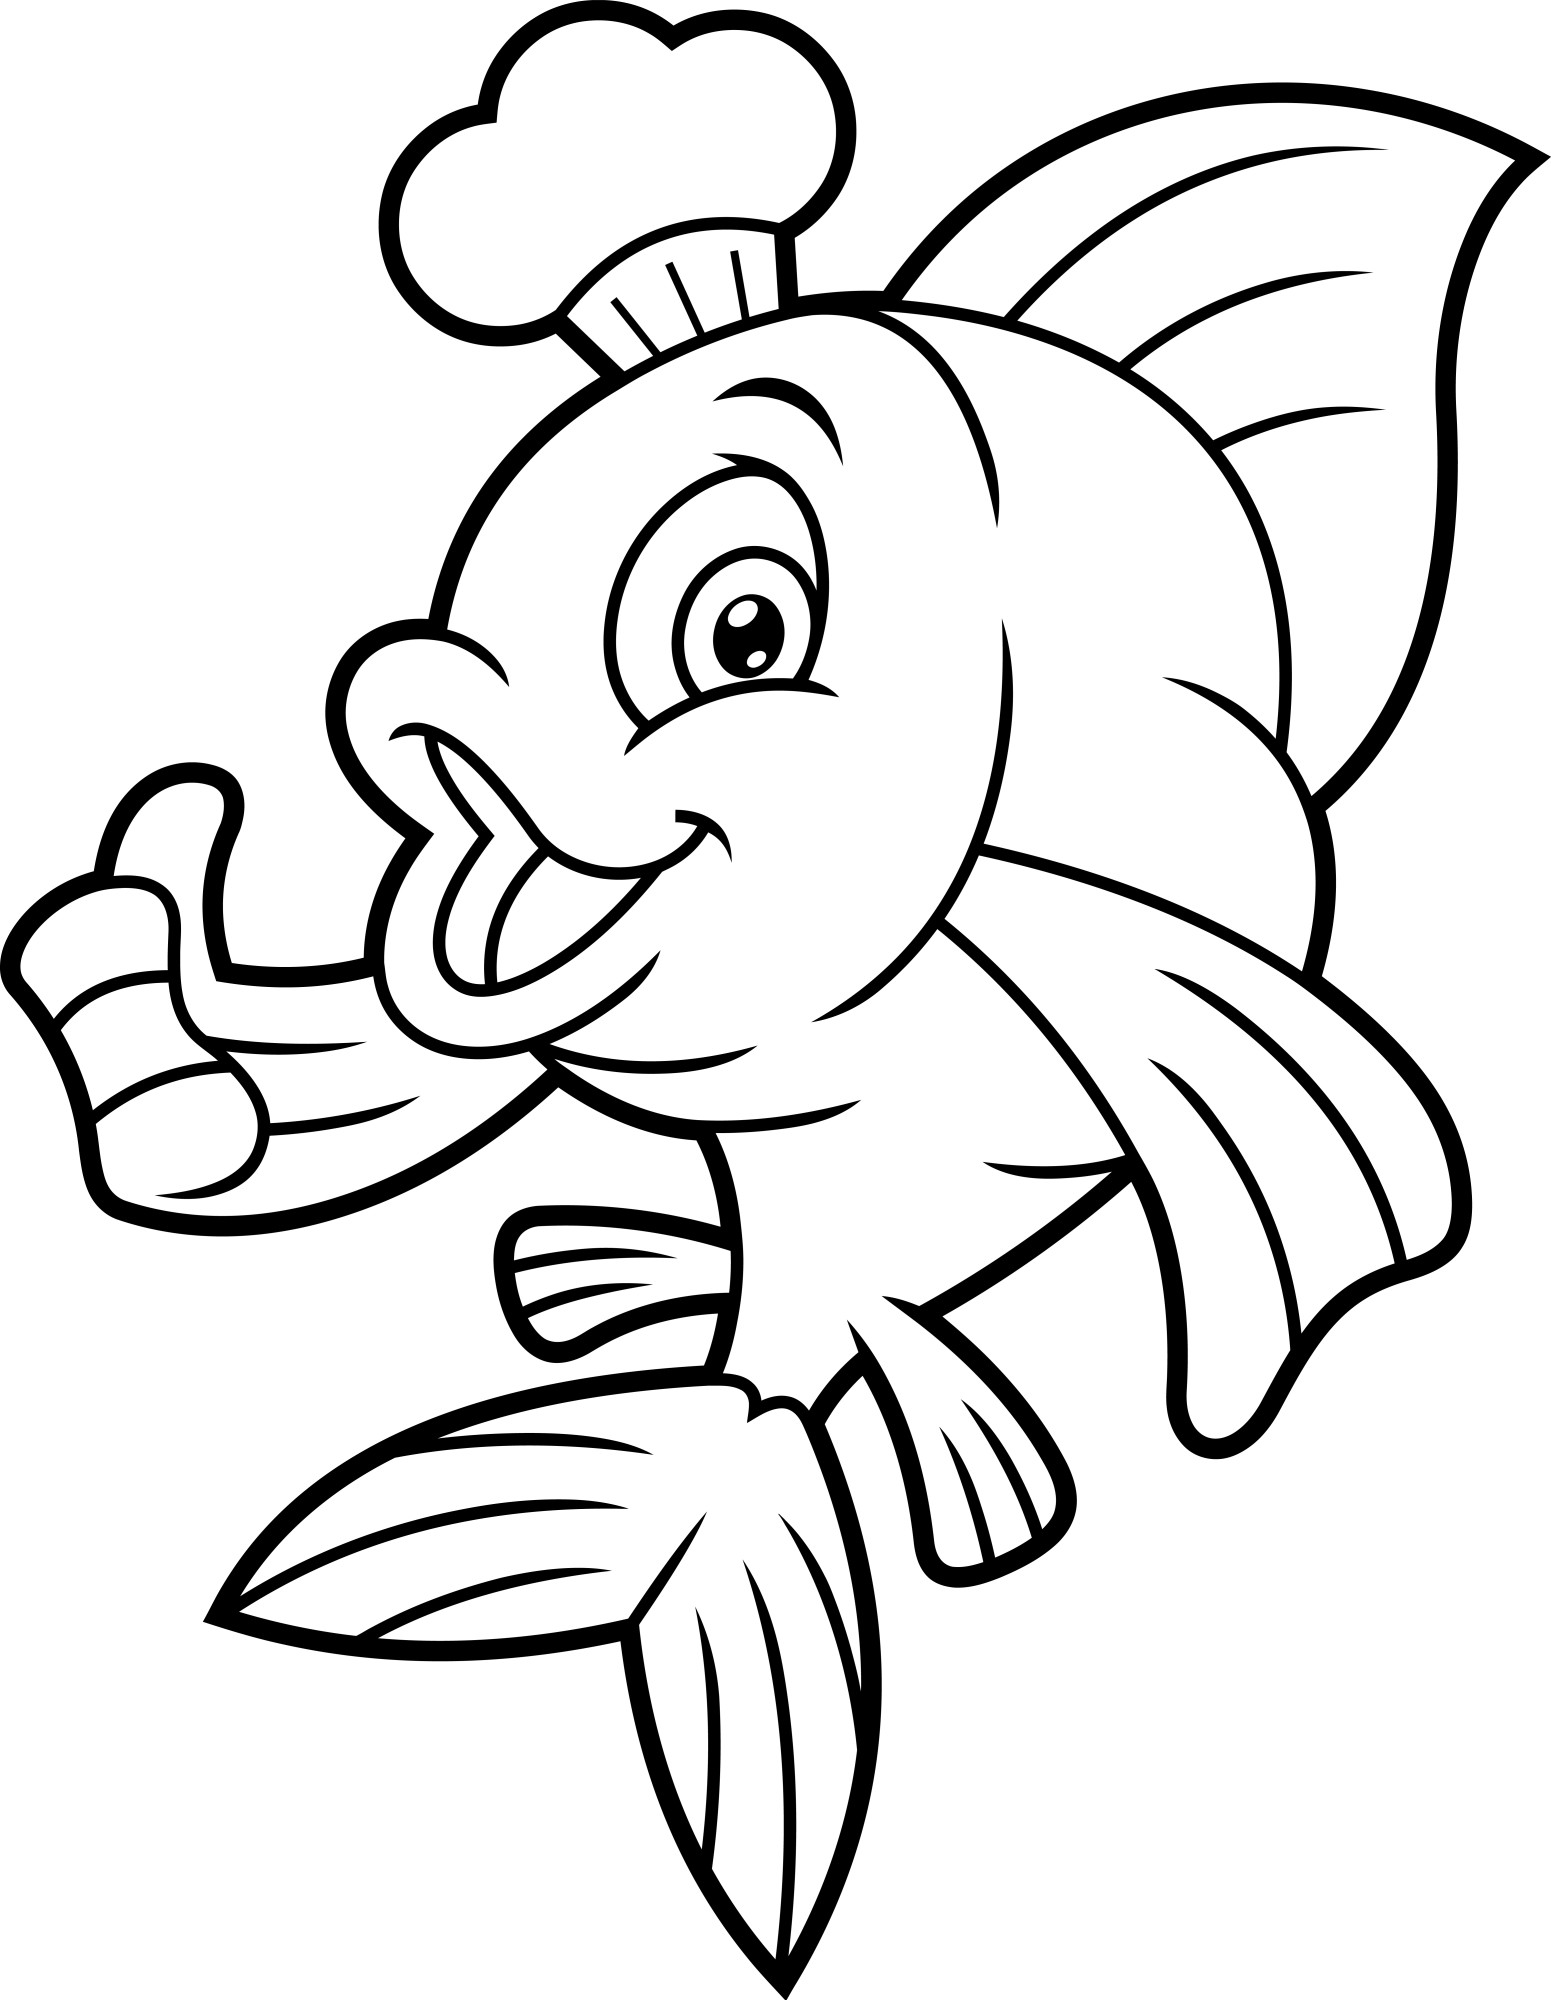 Раскраска для детей: рыба шеф-повар